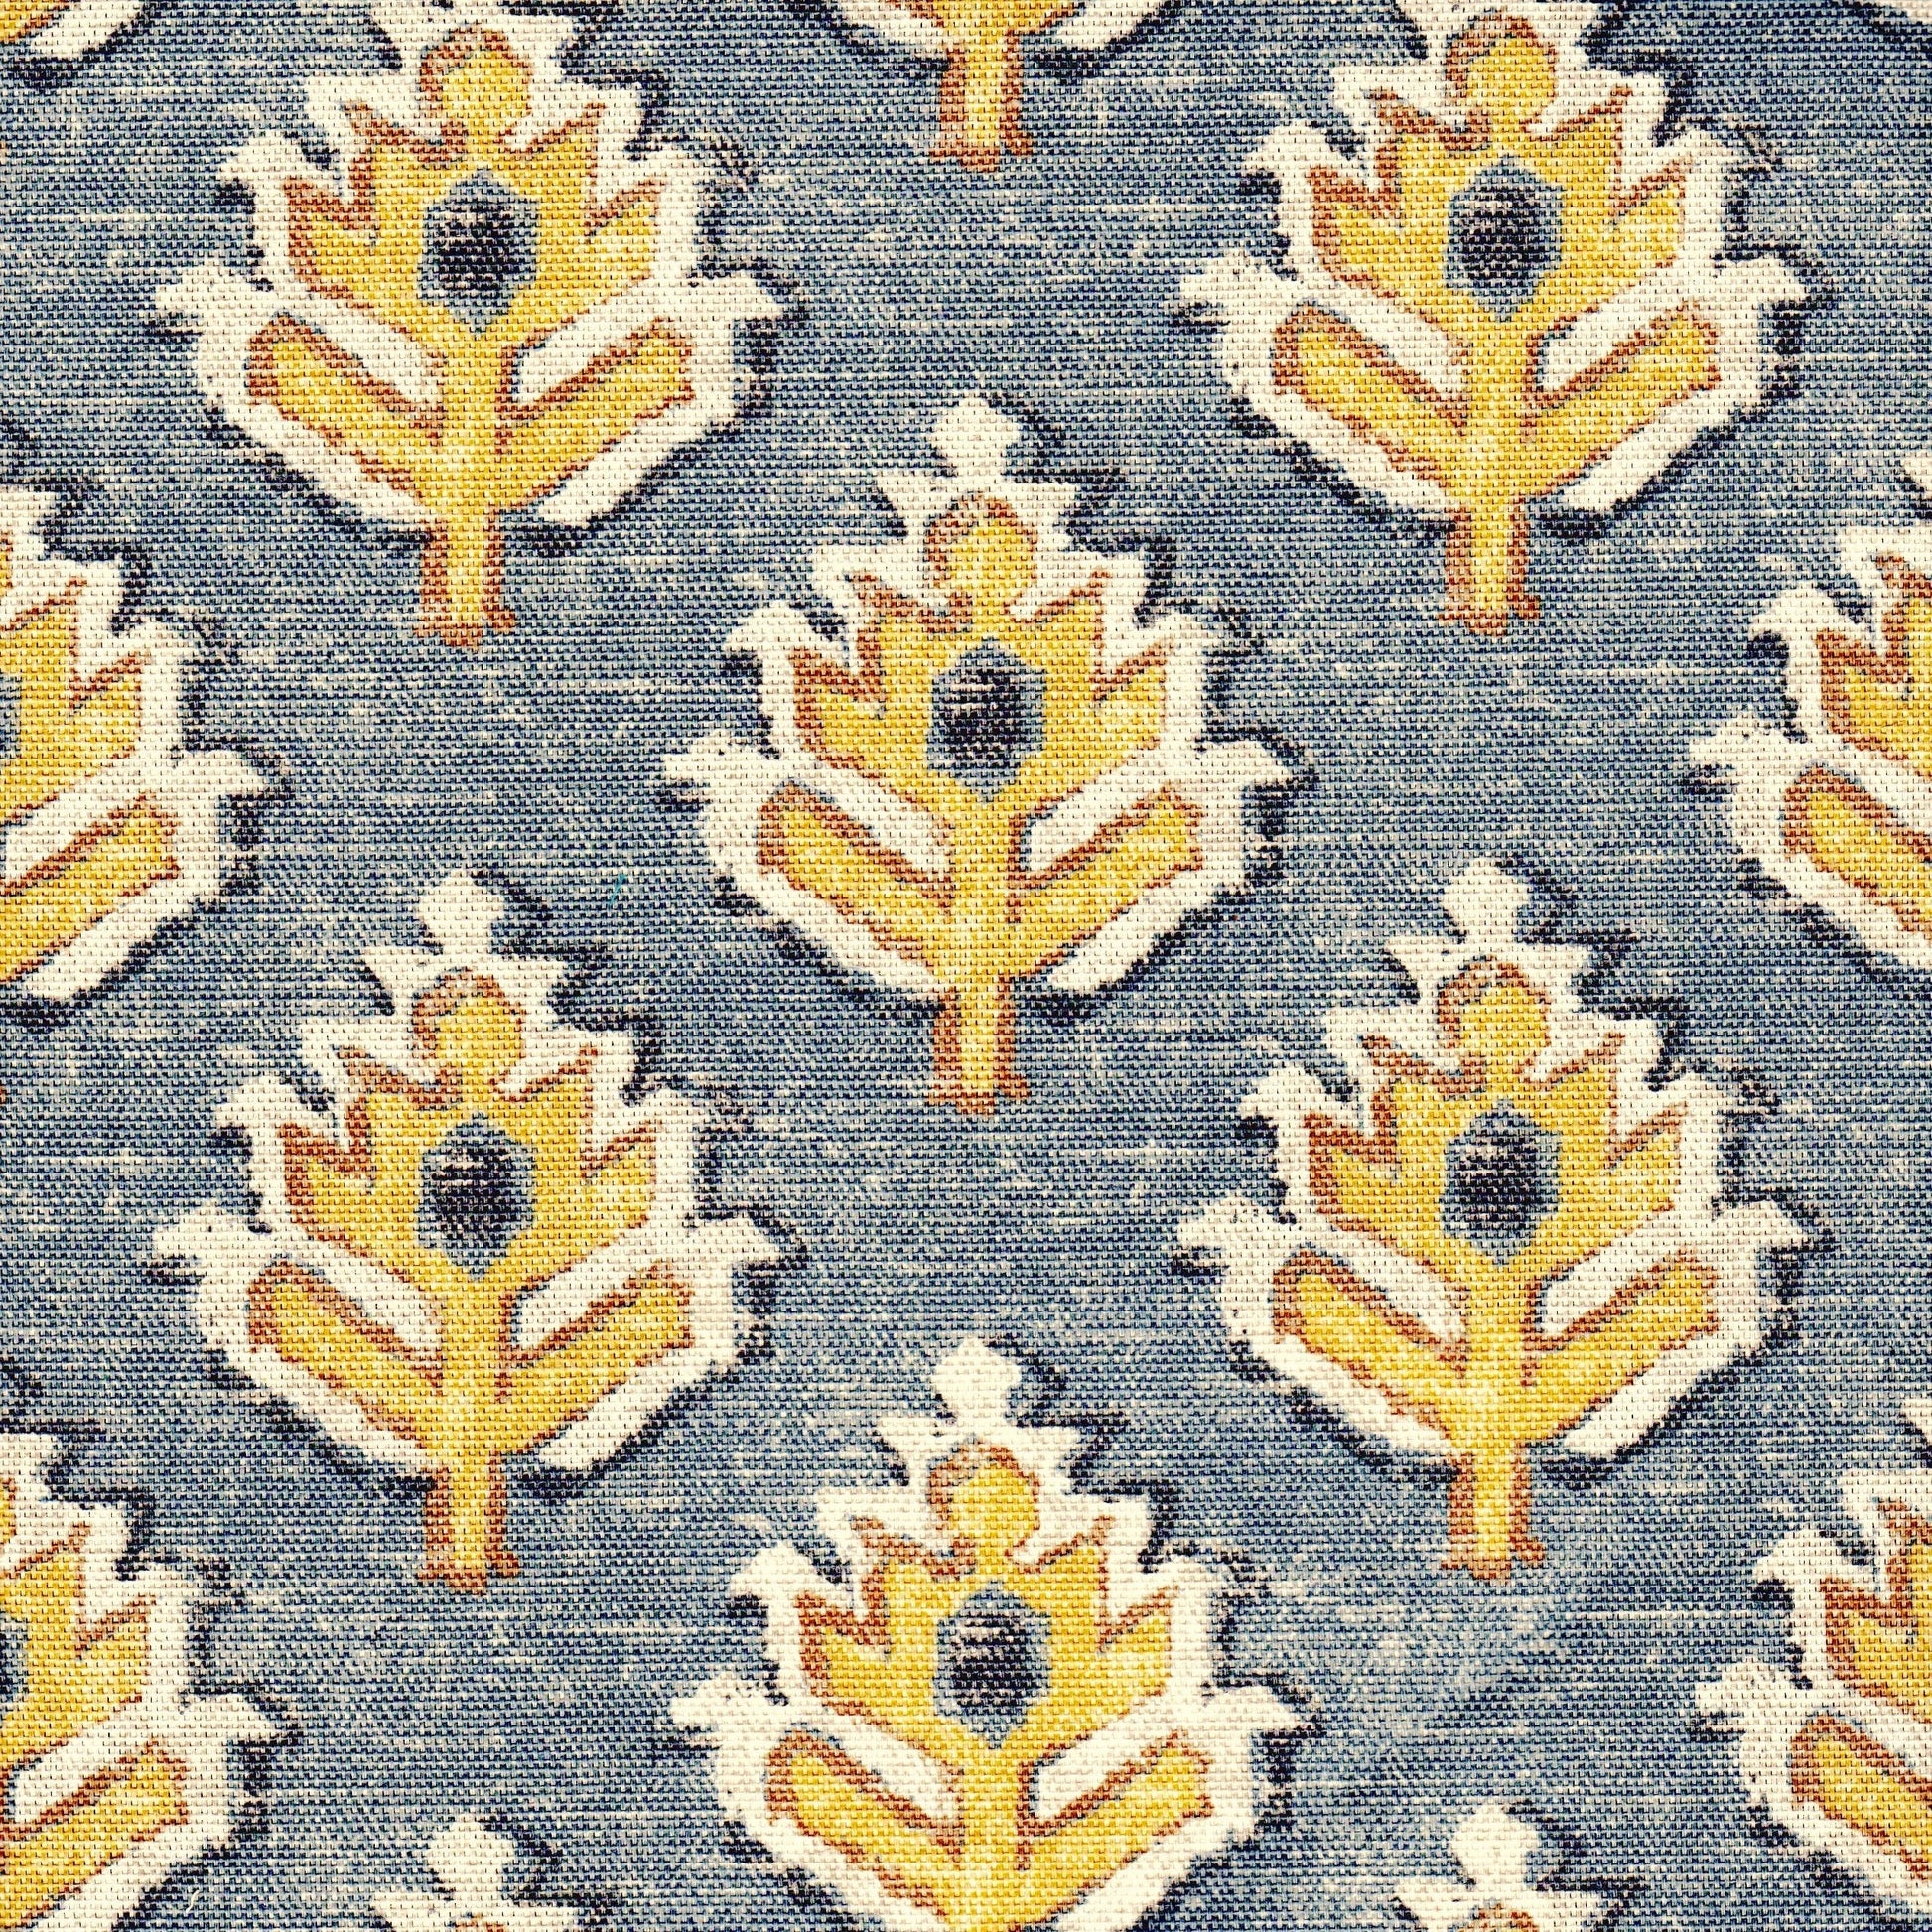 Carter Botanical Design- Small Scale Fabric